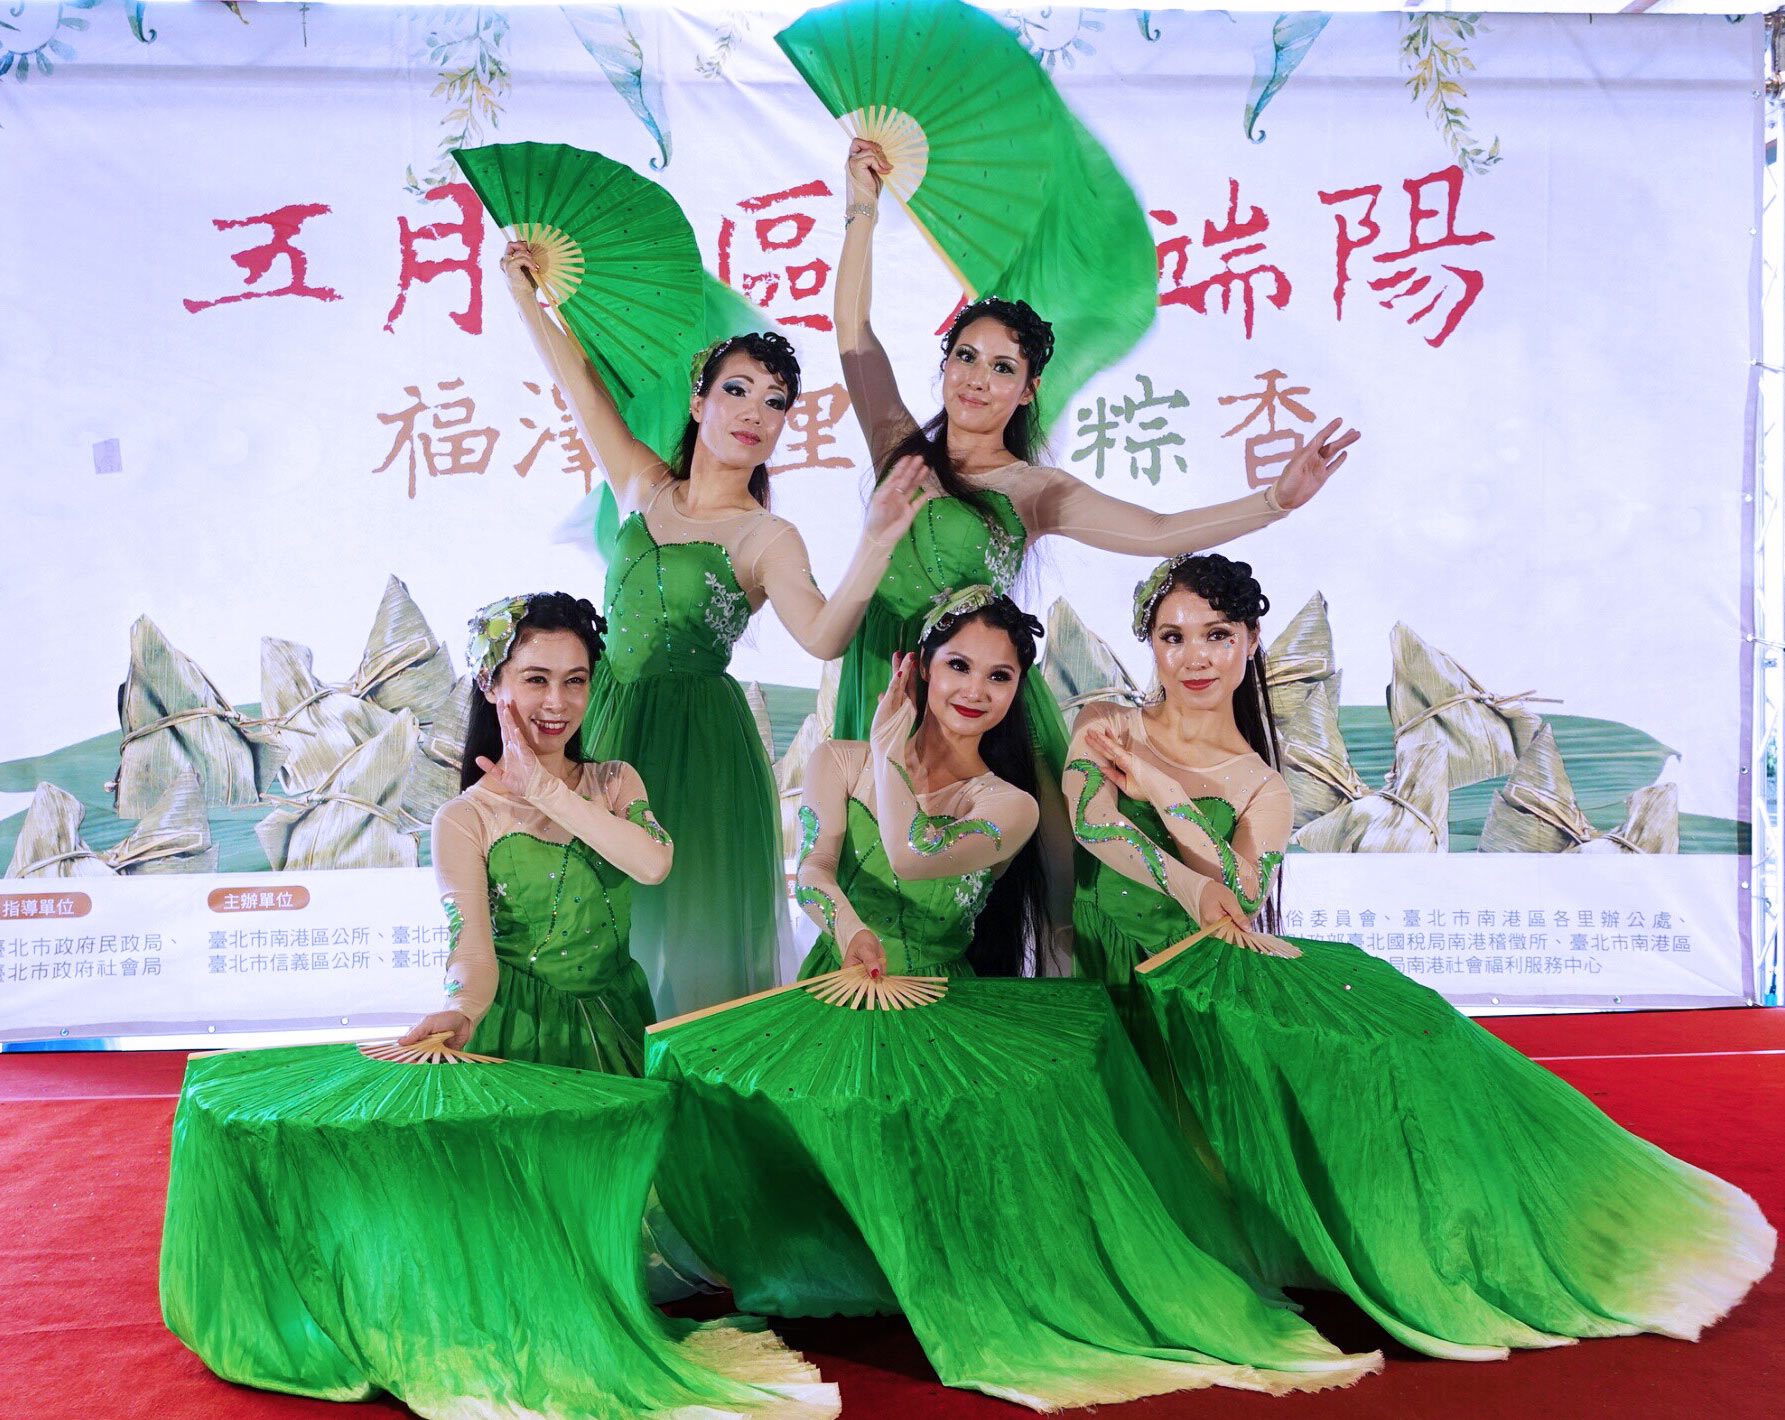 Liu Liu Dance Group performance with the theme of Dragon Boat Festival